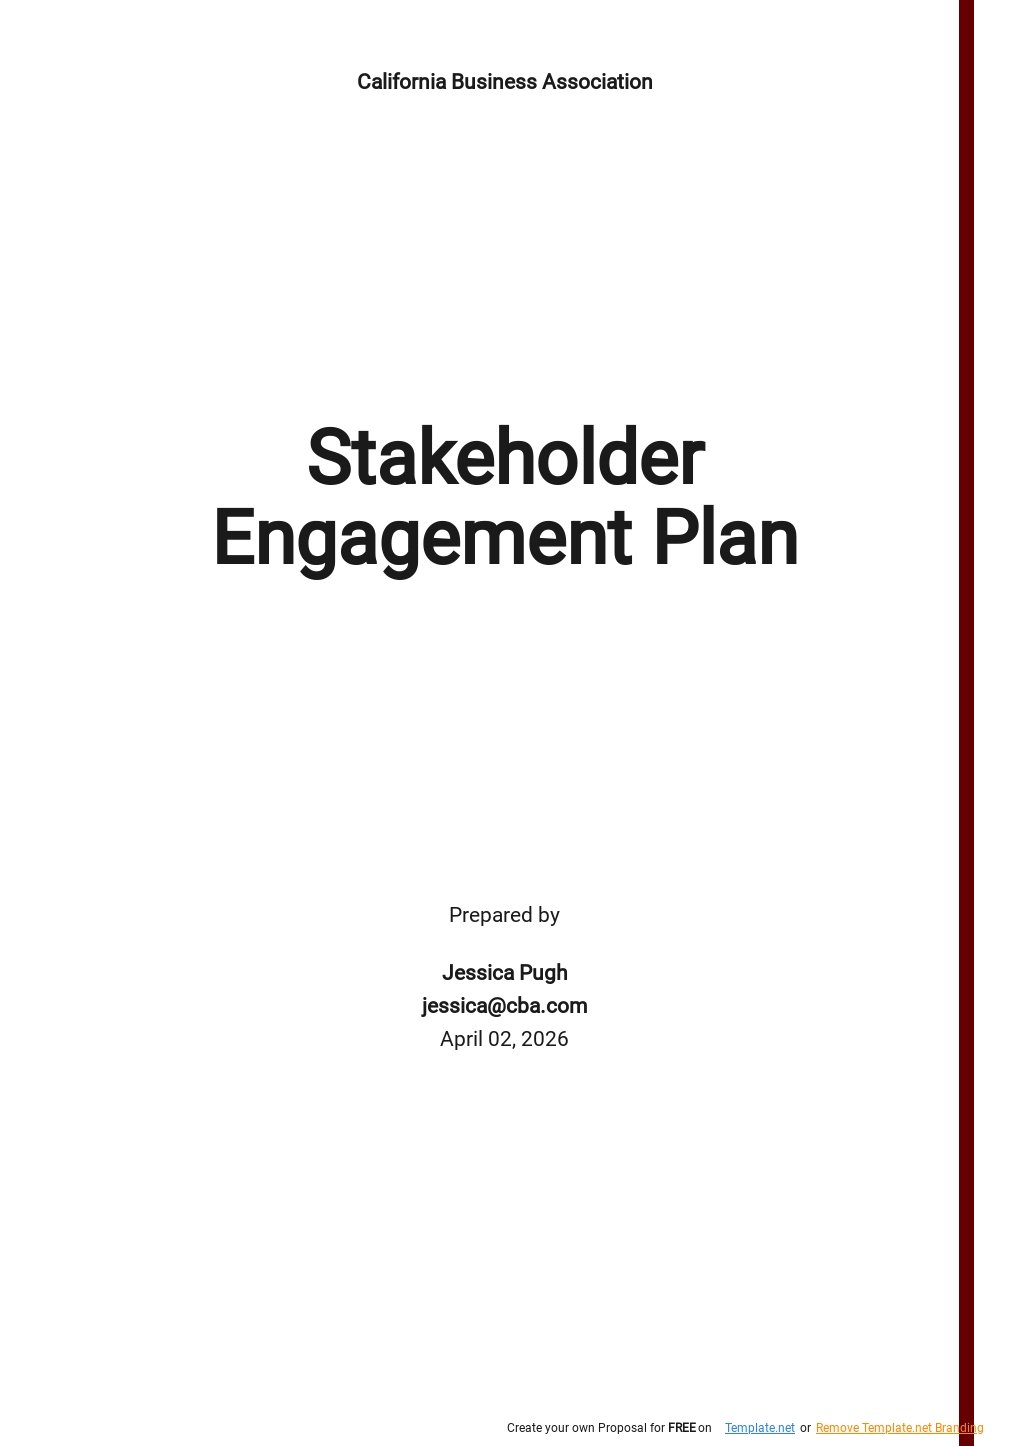 Stakeholder Engagement Plan Template